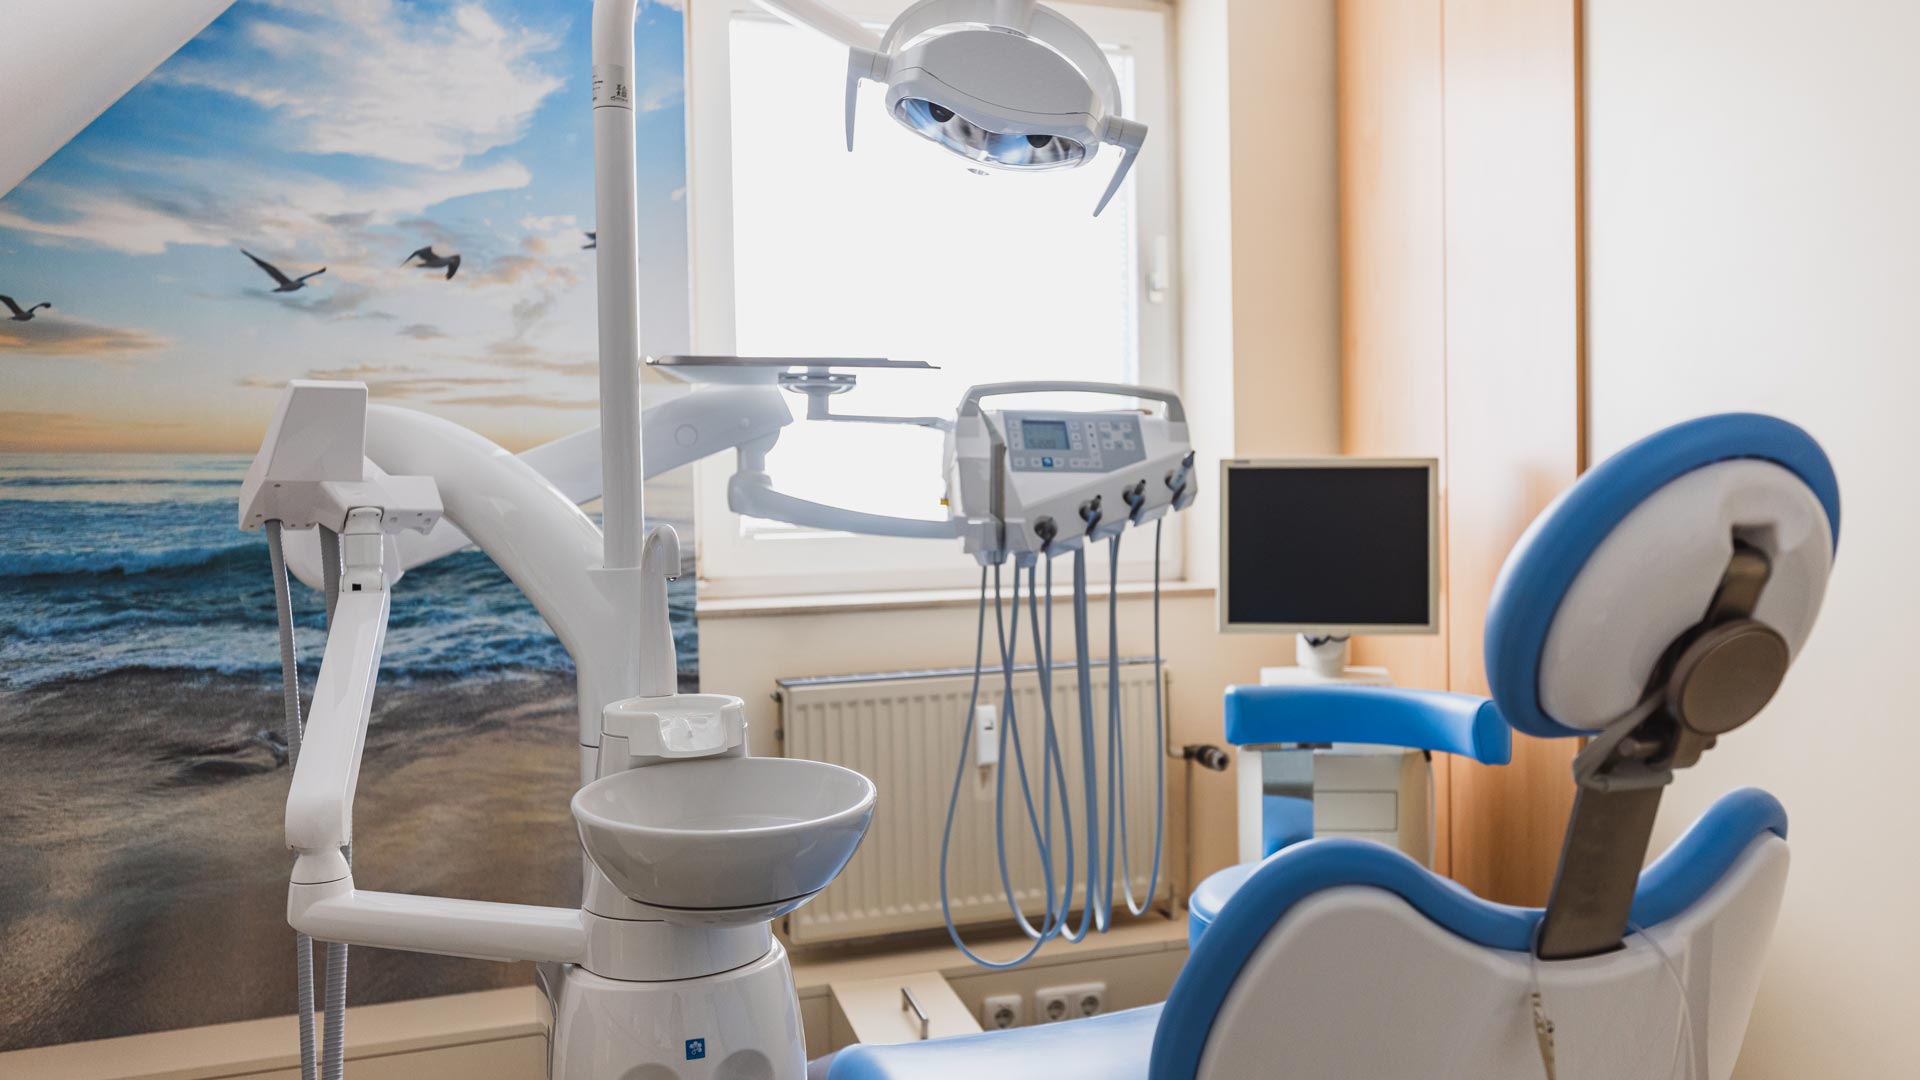 Behandlungsraum der Zahnarztpraxis Dr. Kerstin Loos in Celle